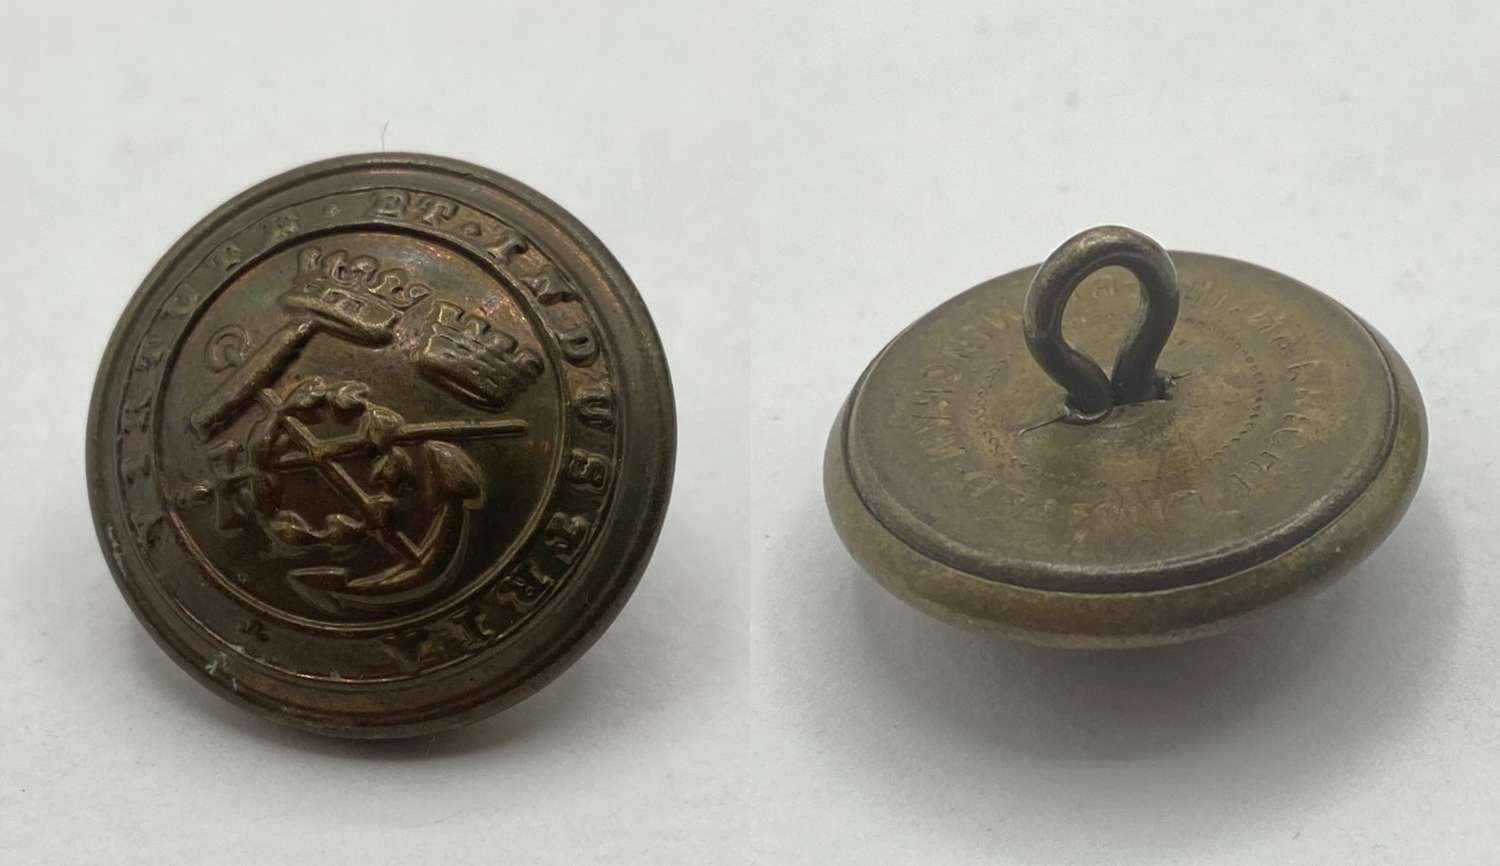 WW2 Corps Of Commissionaires Virtutr Et Industria Brass Button